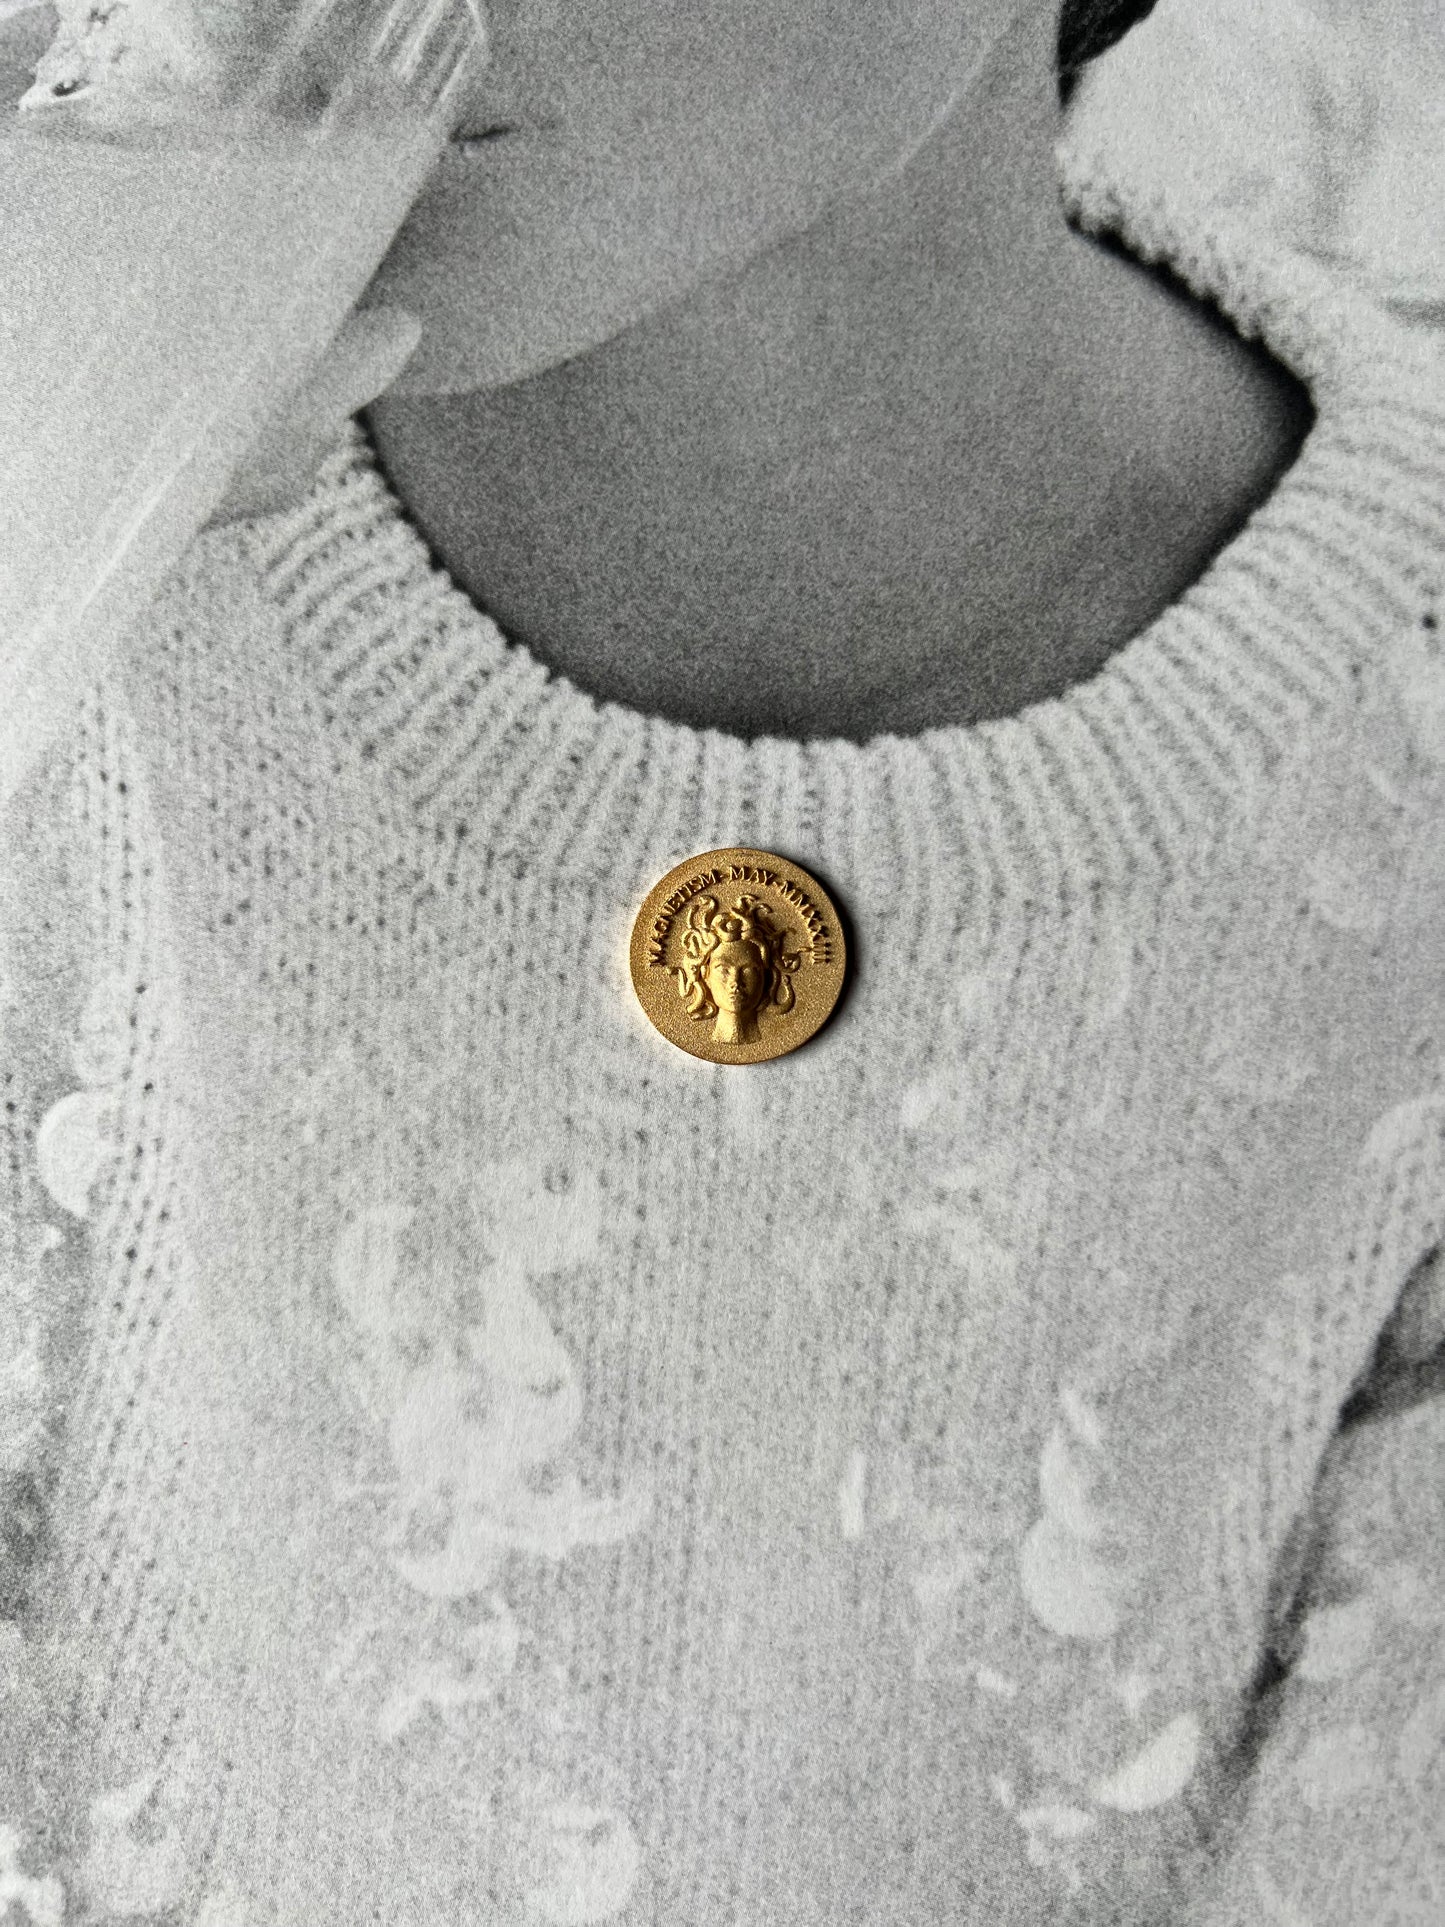 Medusa antique coin gold